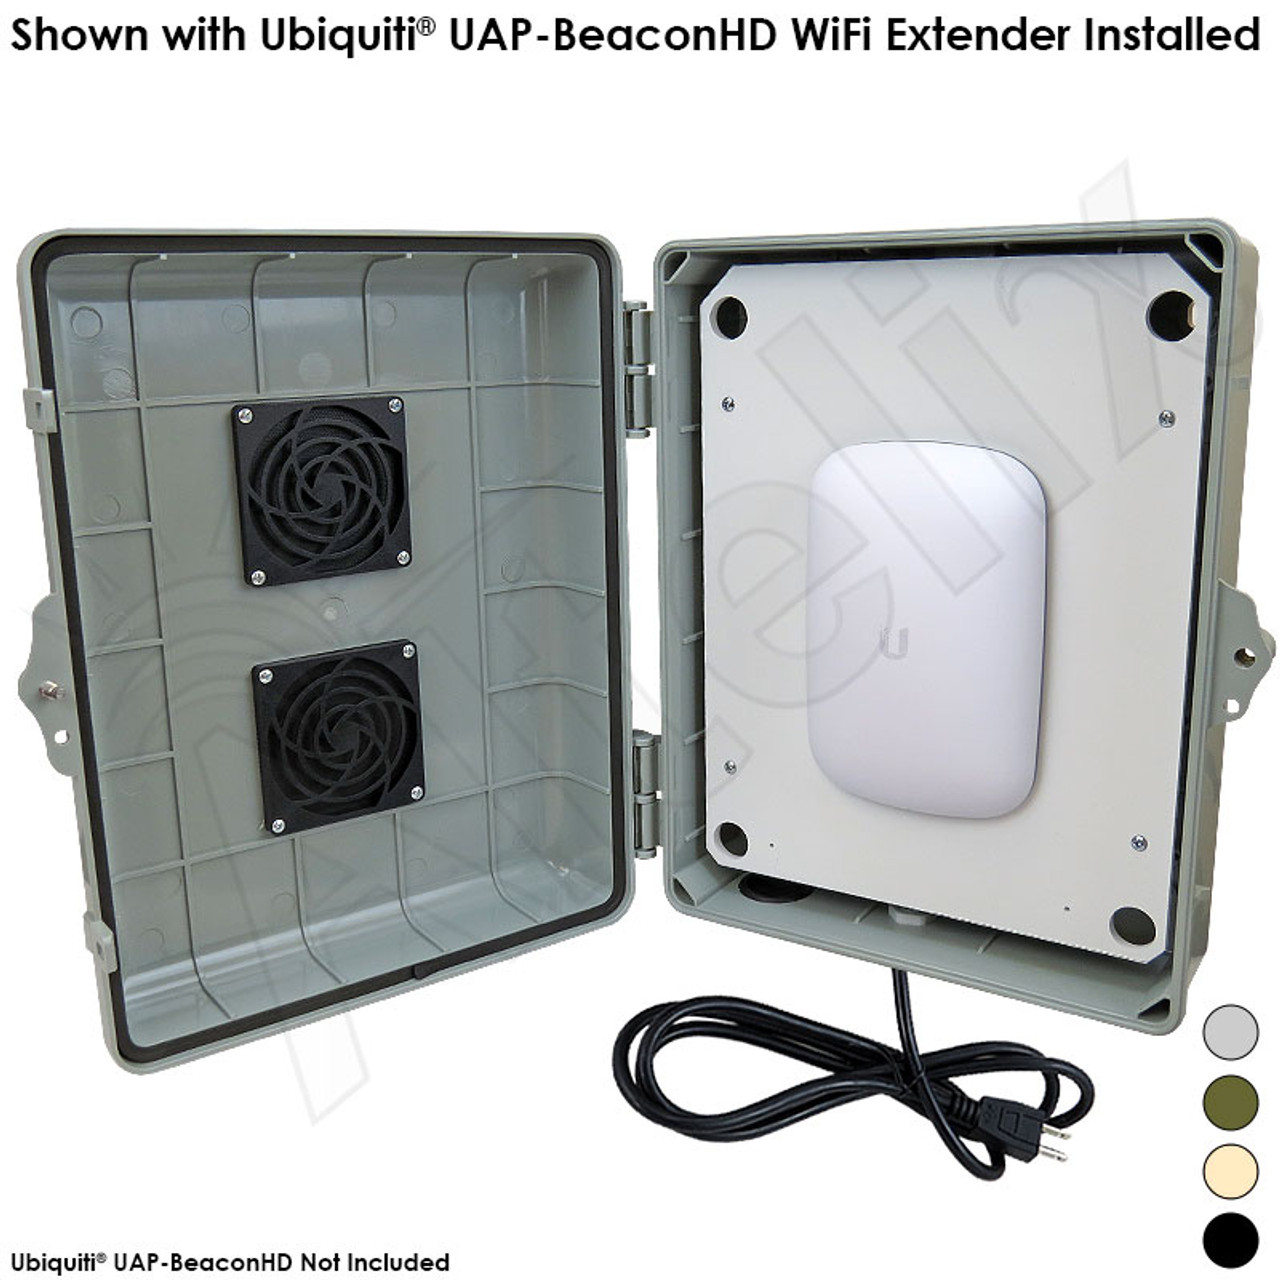 Oferta : decodificador de satélite con WiFi Aouxun por 46